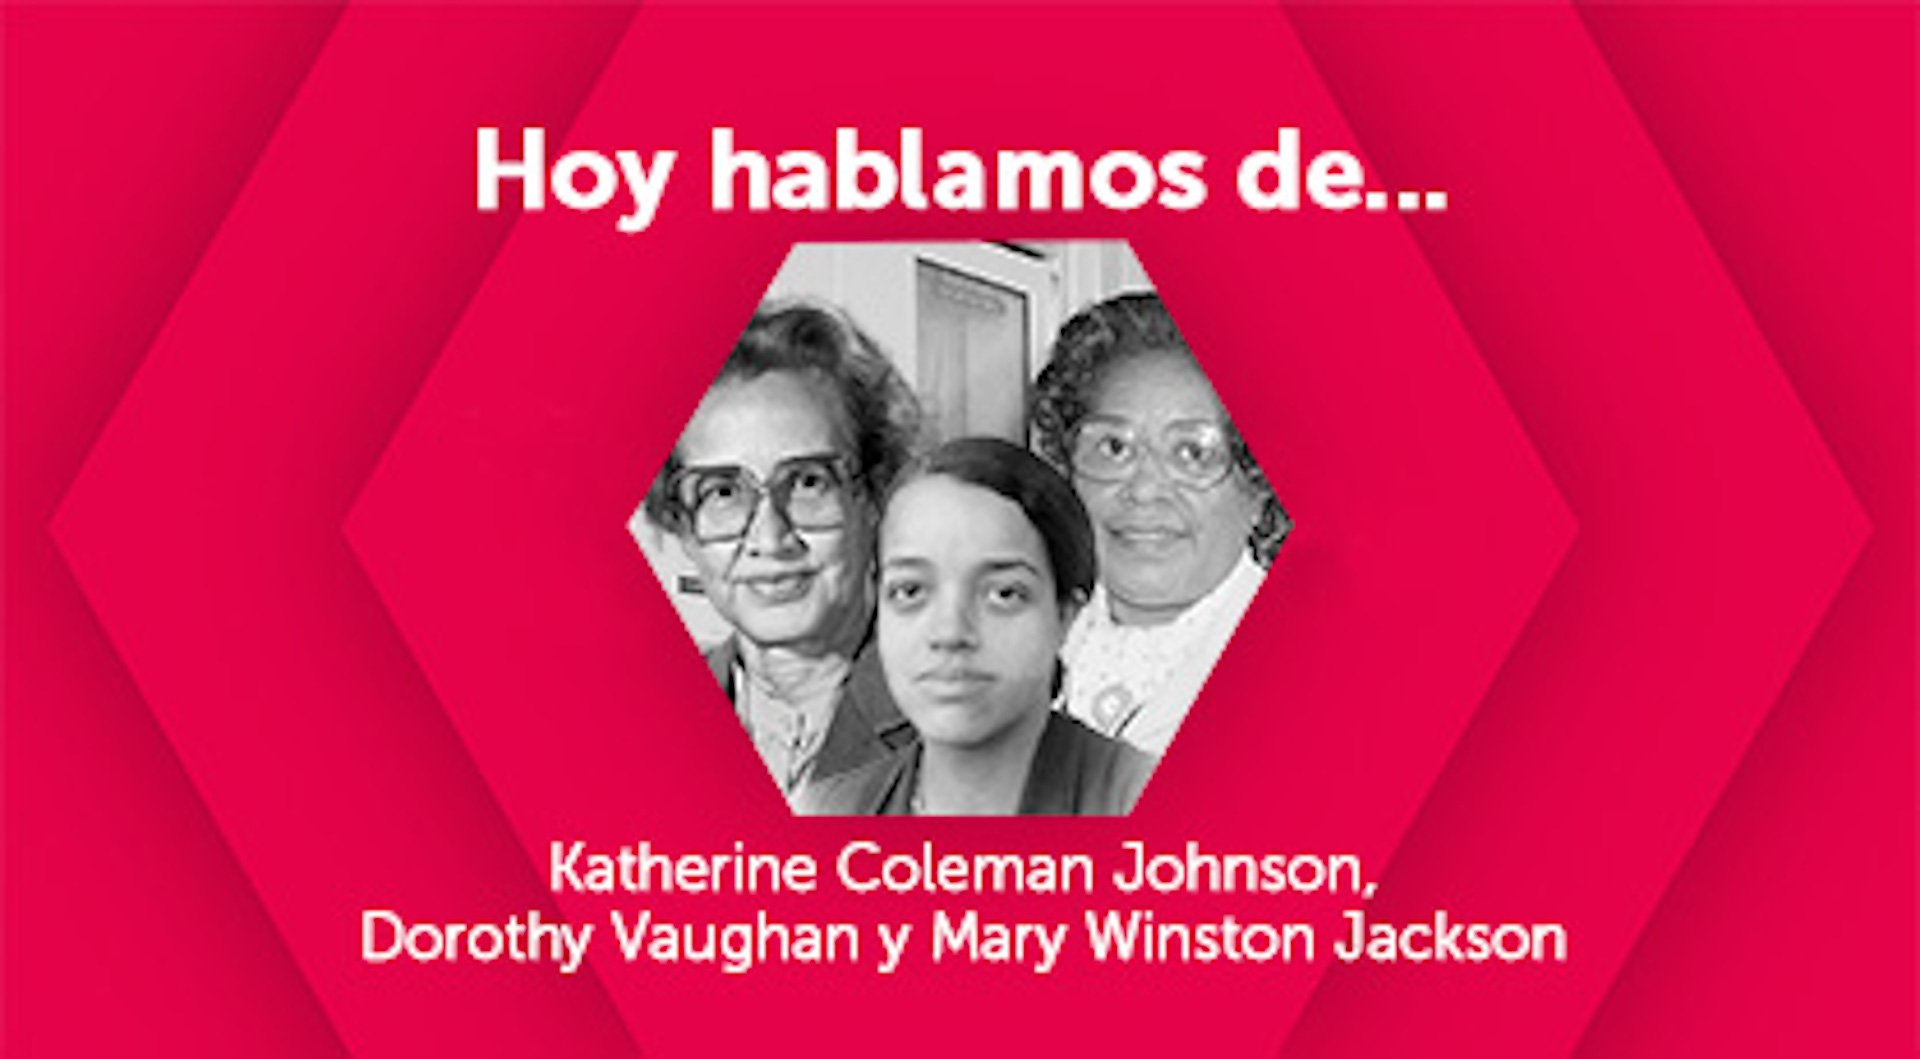 Hoy hablamos de Katherine Coleman Johnson, Dorothy Vaughan y Mary Winston Jackson